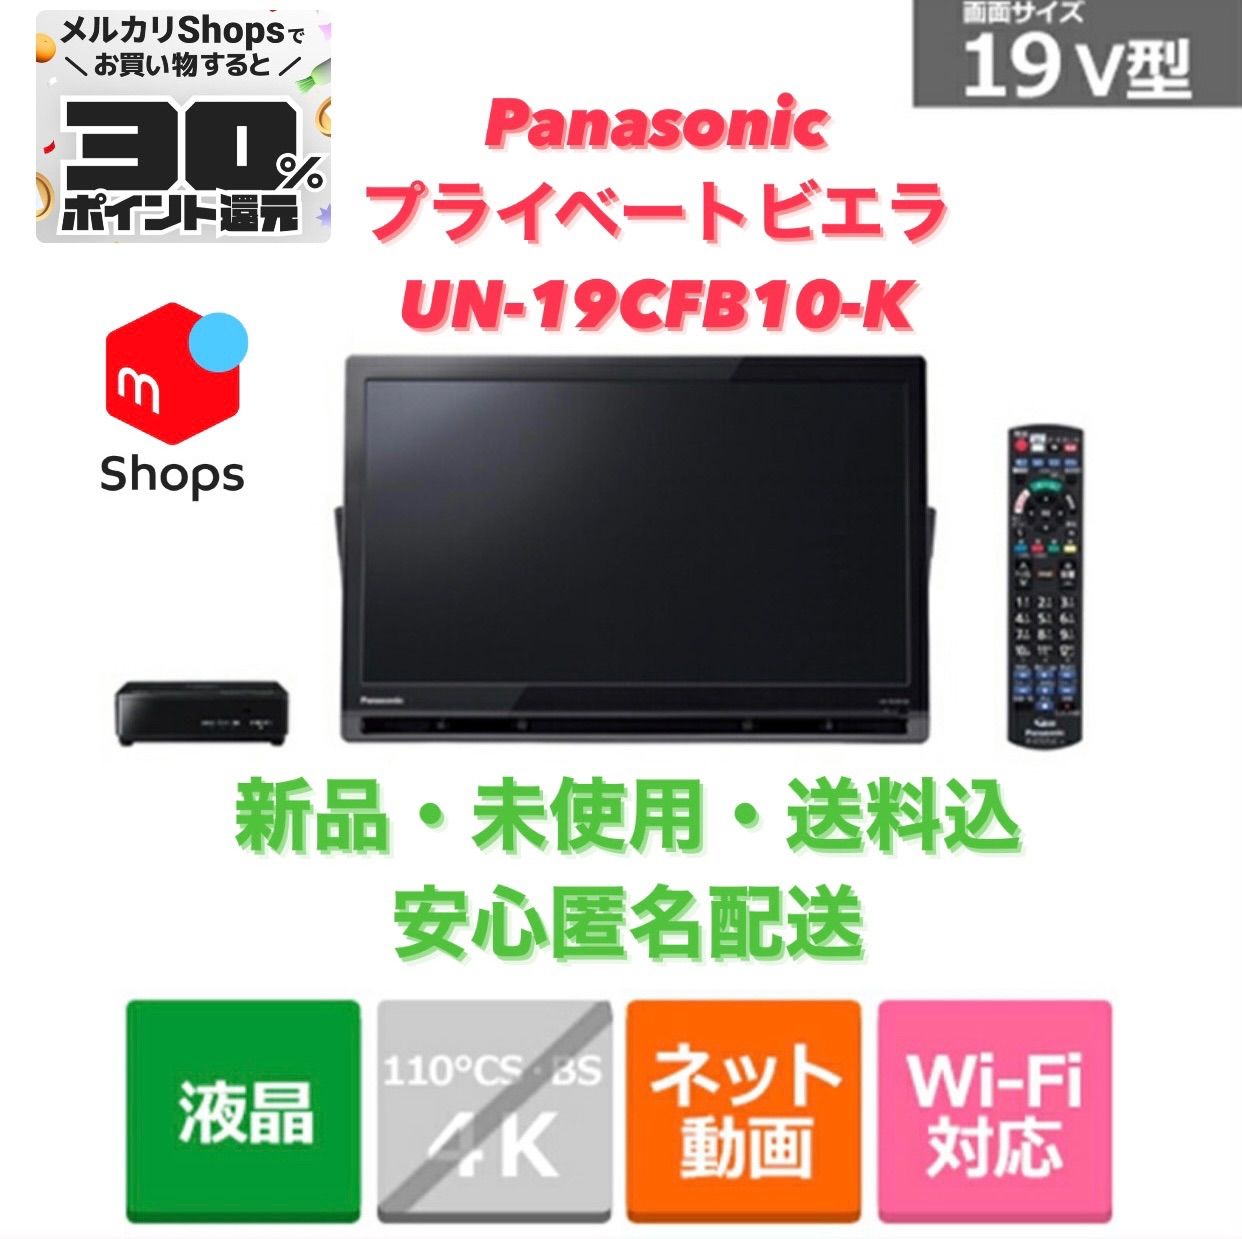 Panasonic プライベートビエラ UN-19CFB10D